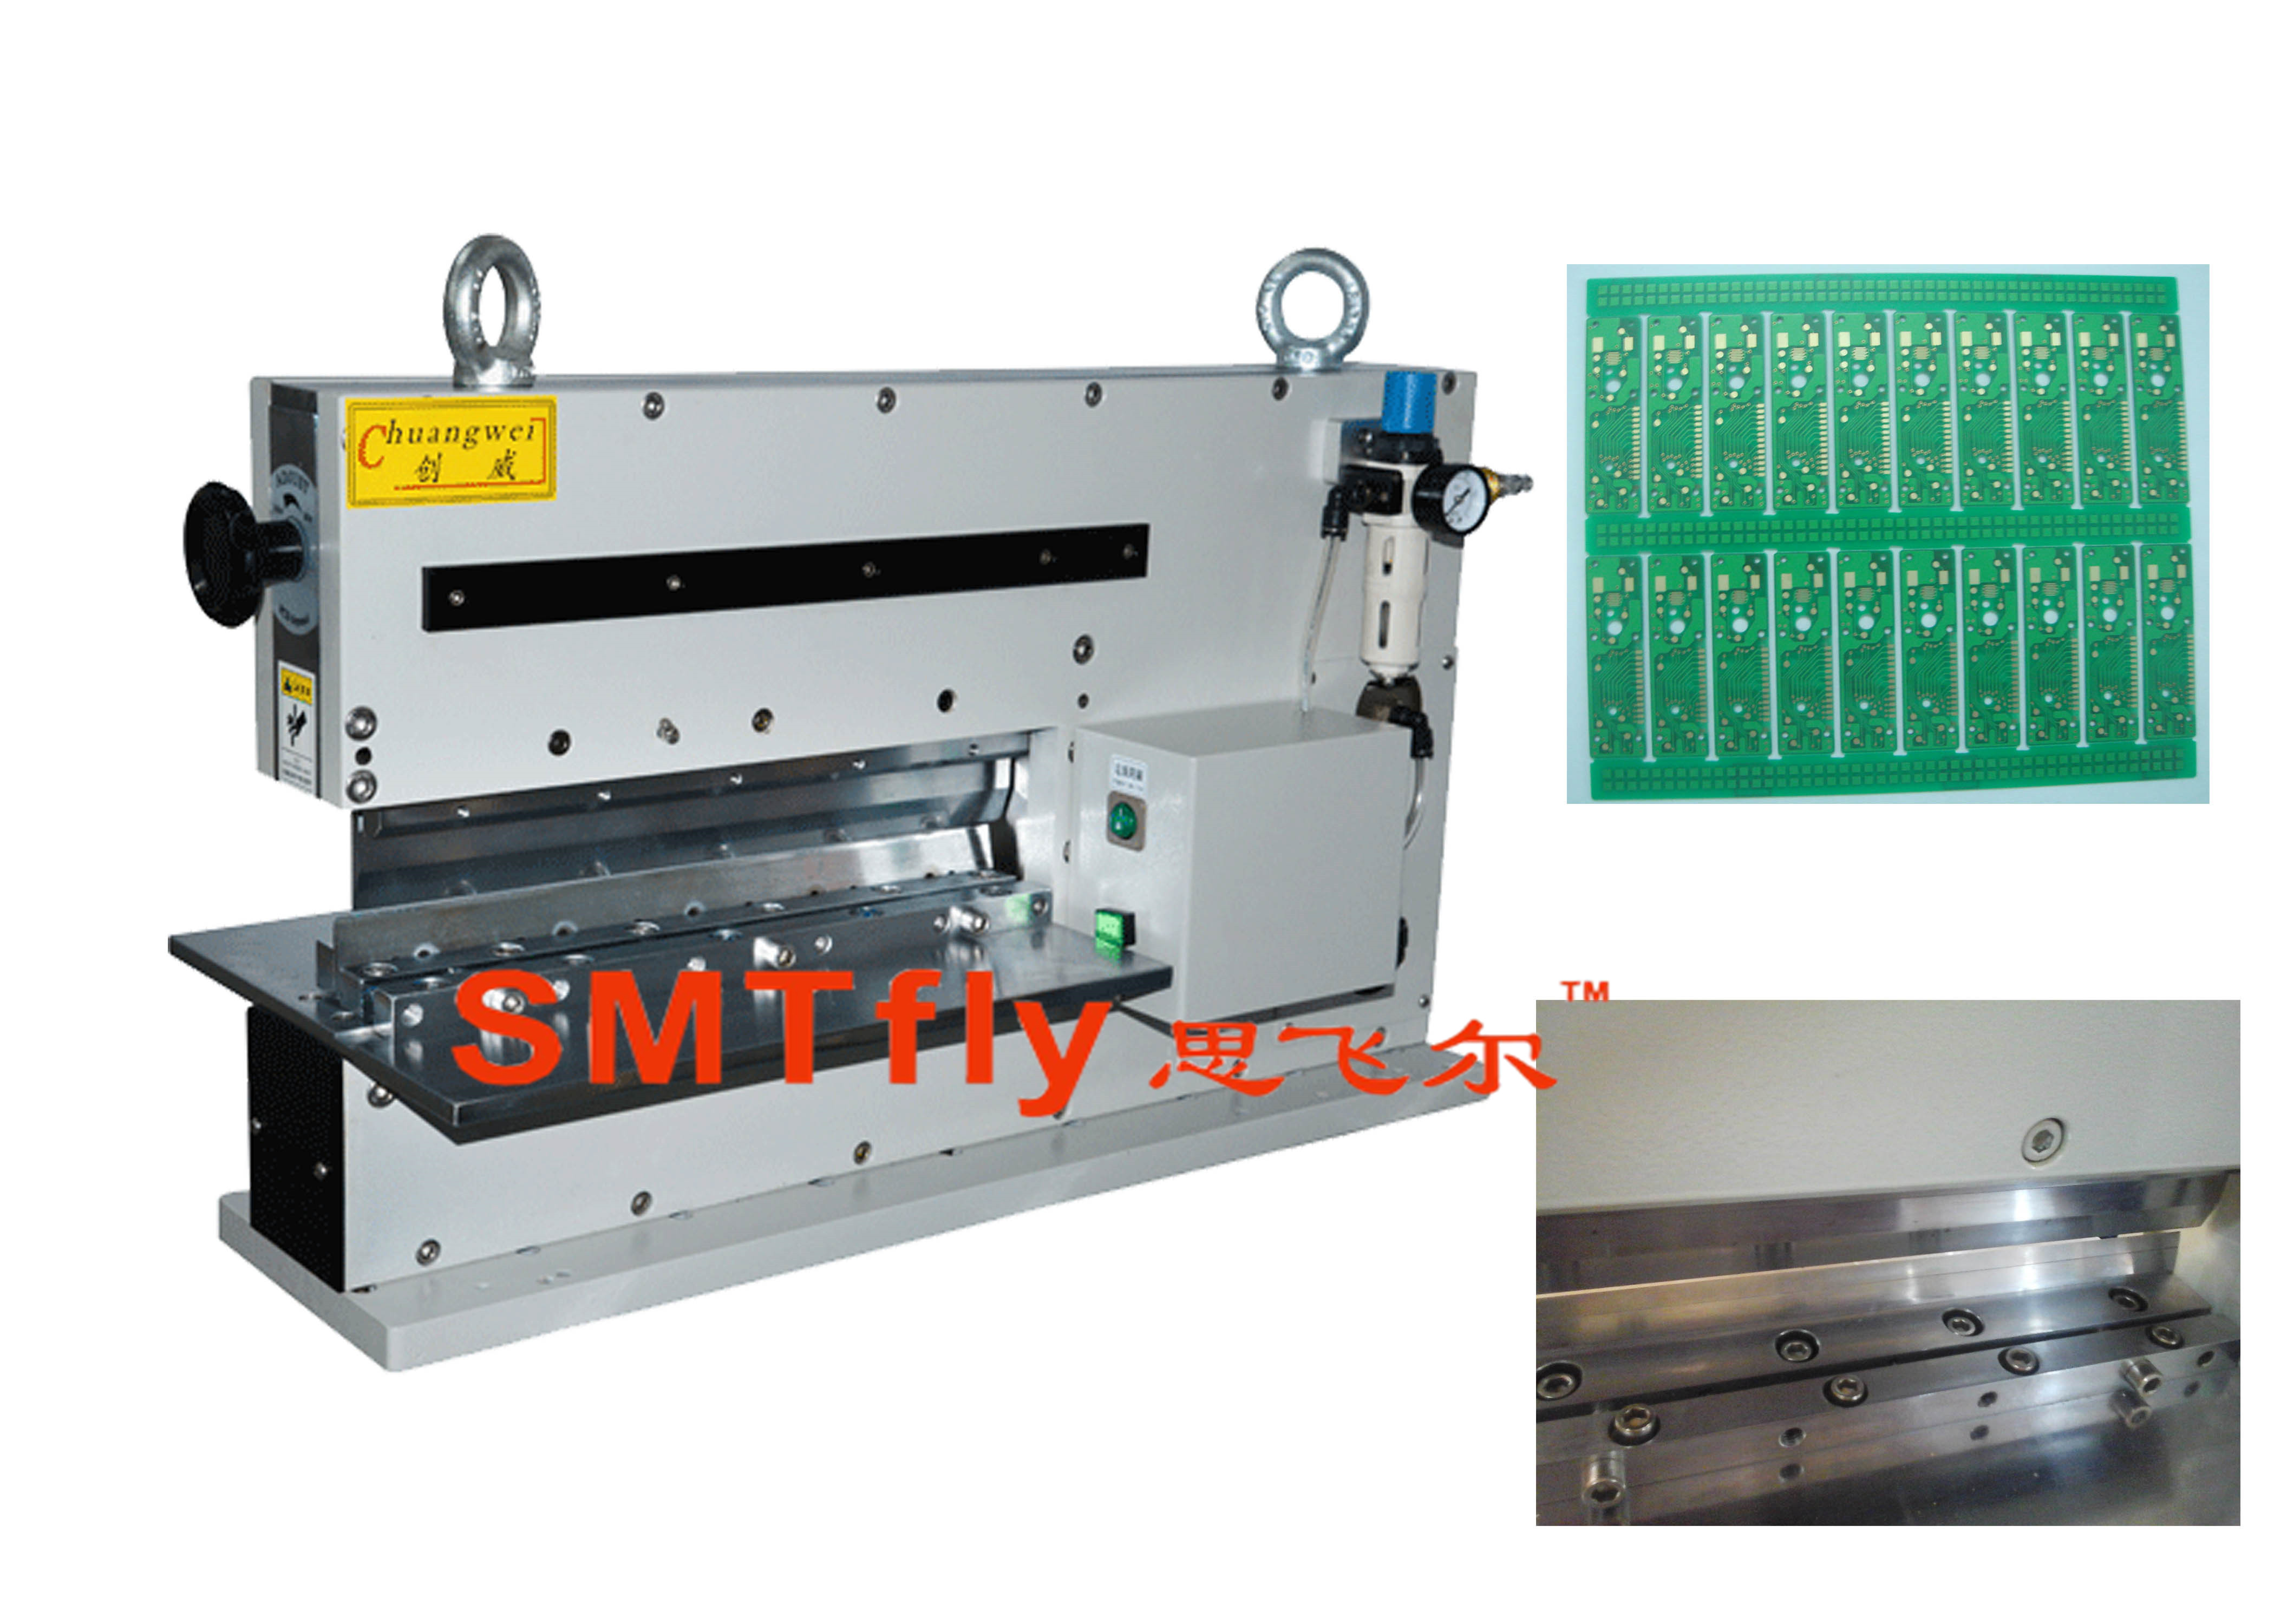 Multilayer PCB Depaneling Tool,SMTfly-400J